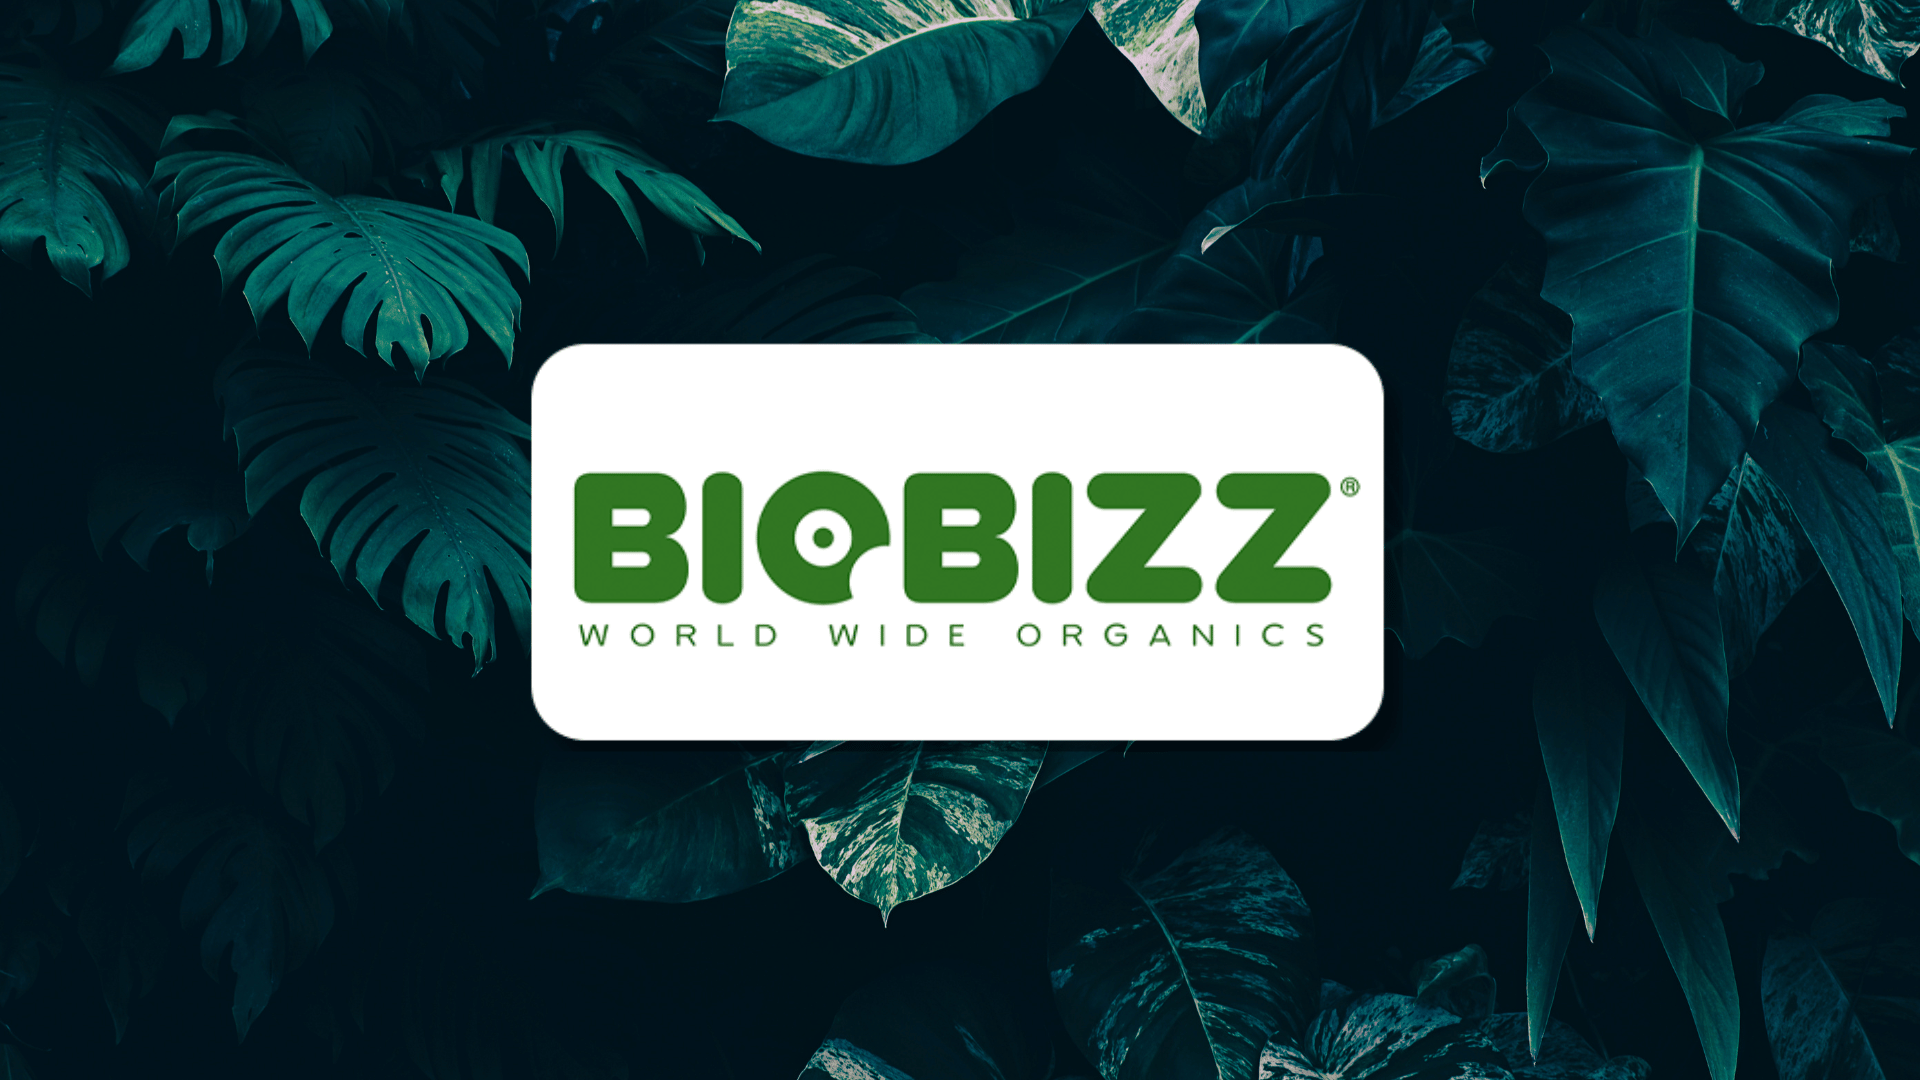 BioBizz Nutrient Range: Complete Guide